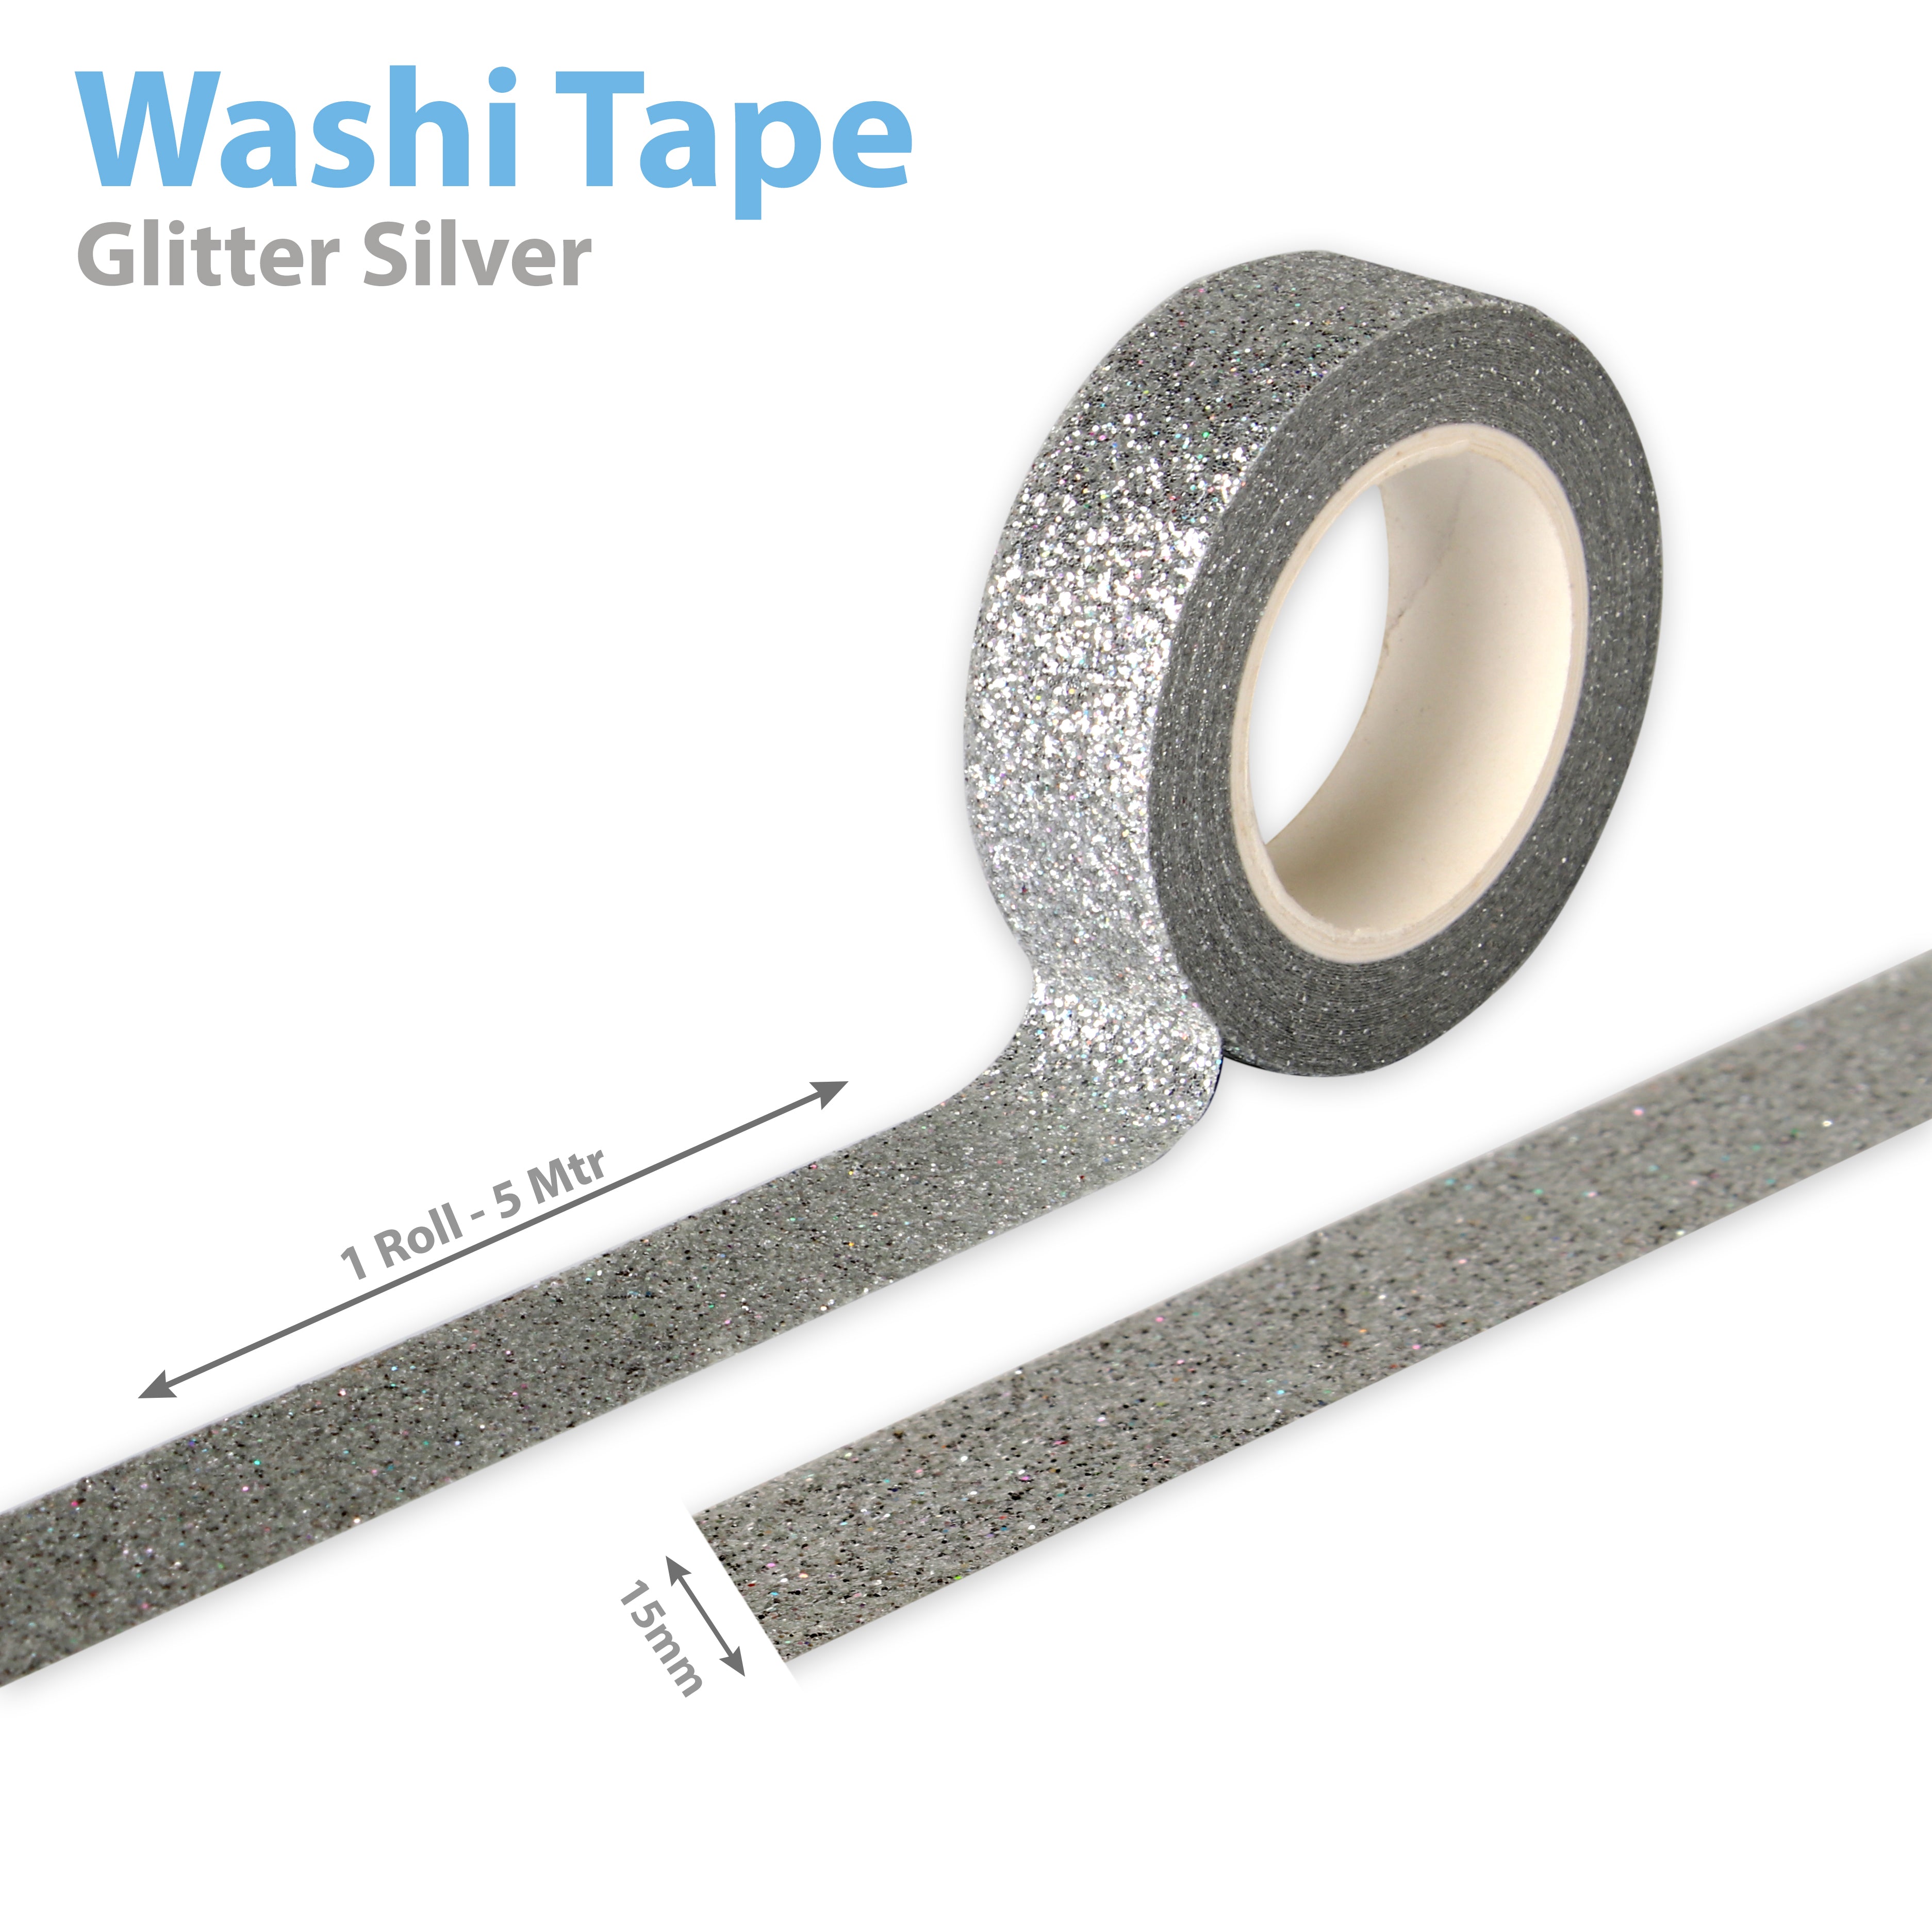 Washi Tape Rolls, Silver Glitter